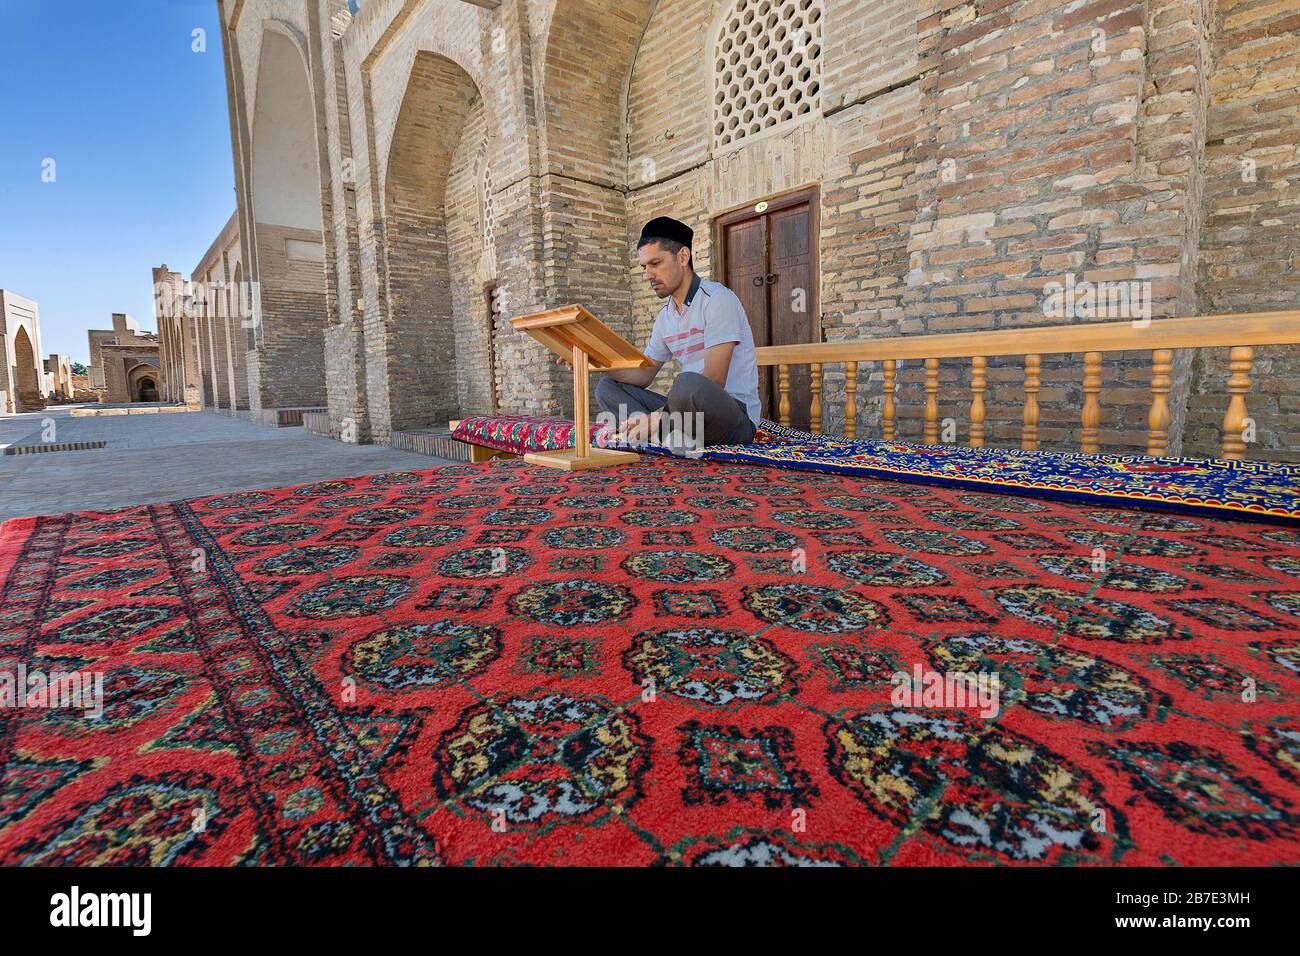 Uzbek man sitting on the carpet and reading in the courtyard of Chor Bakr religious complex, in Bukhara, Uzbekistan Stock Photo